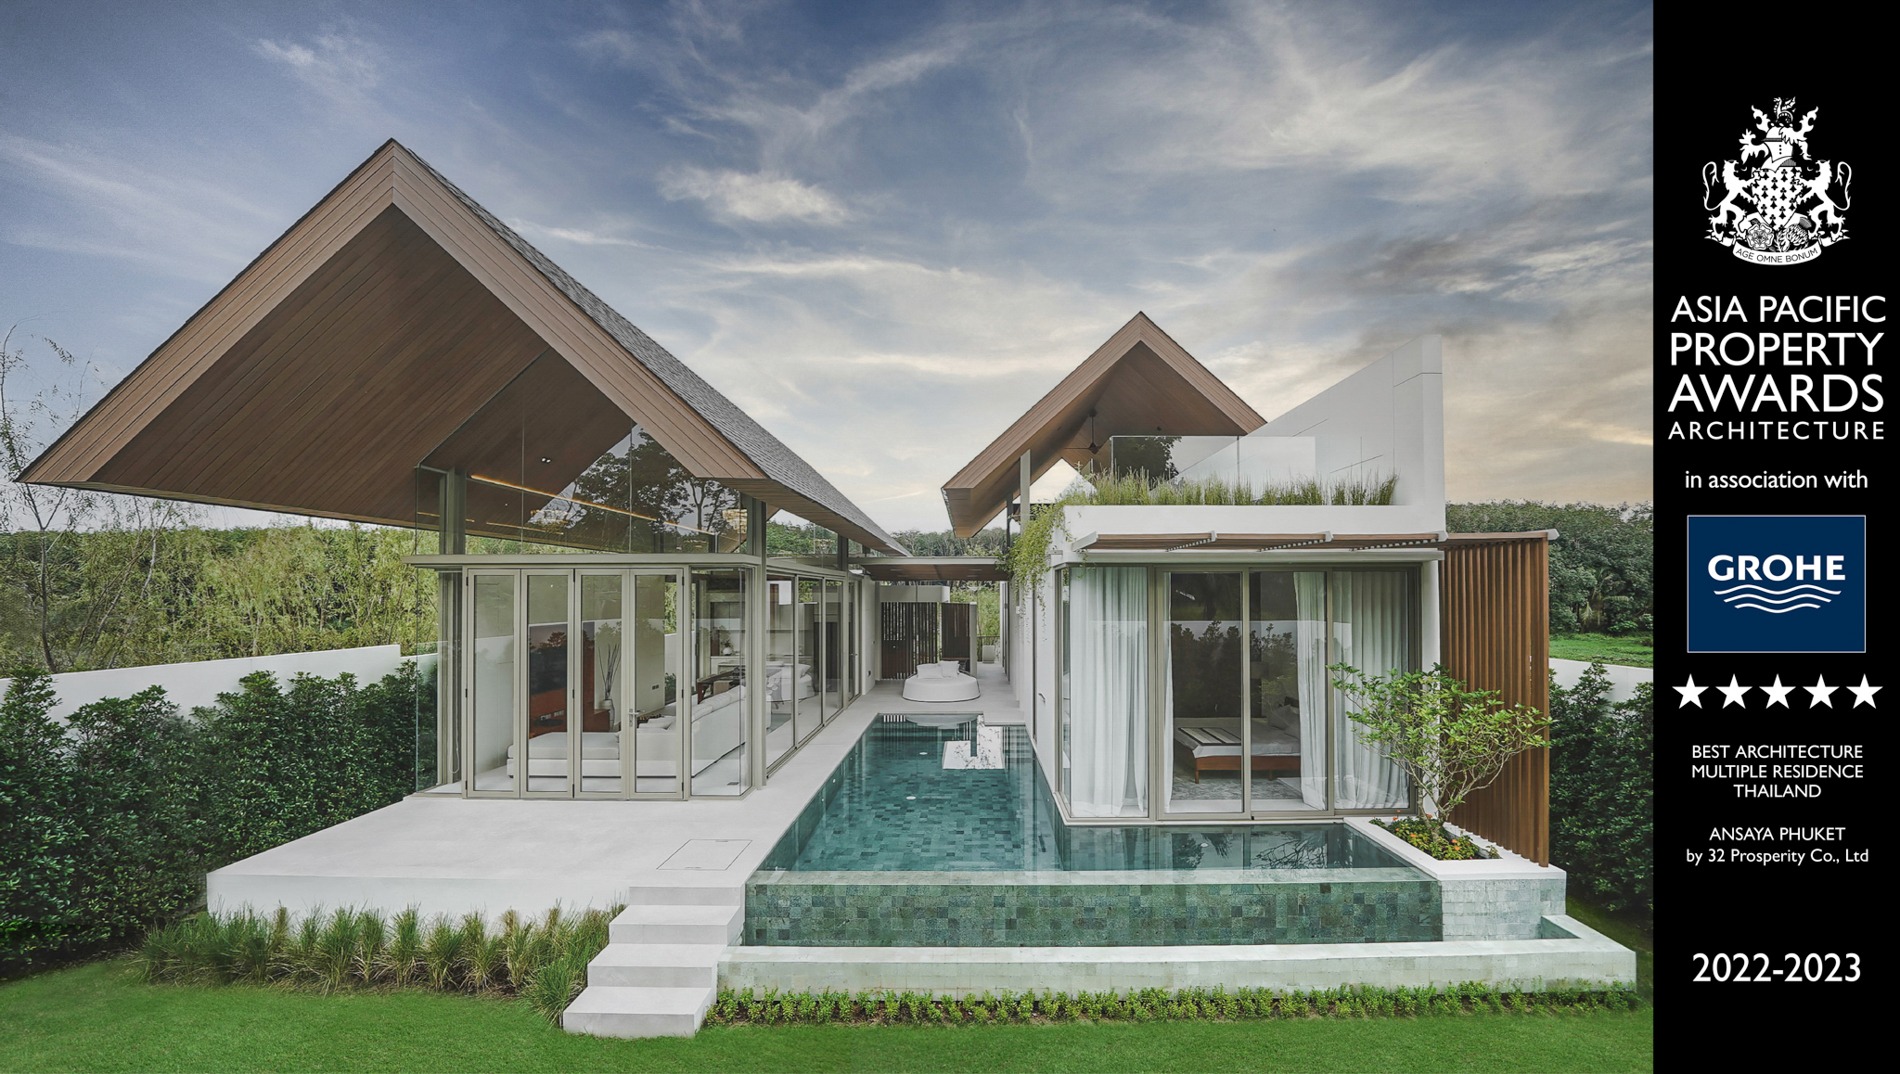 ANSAYA PHUKET Villa for Sale in Phuket Main Image 1